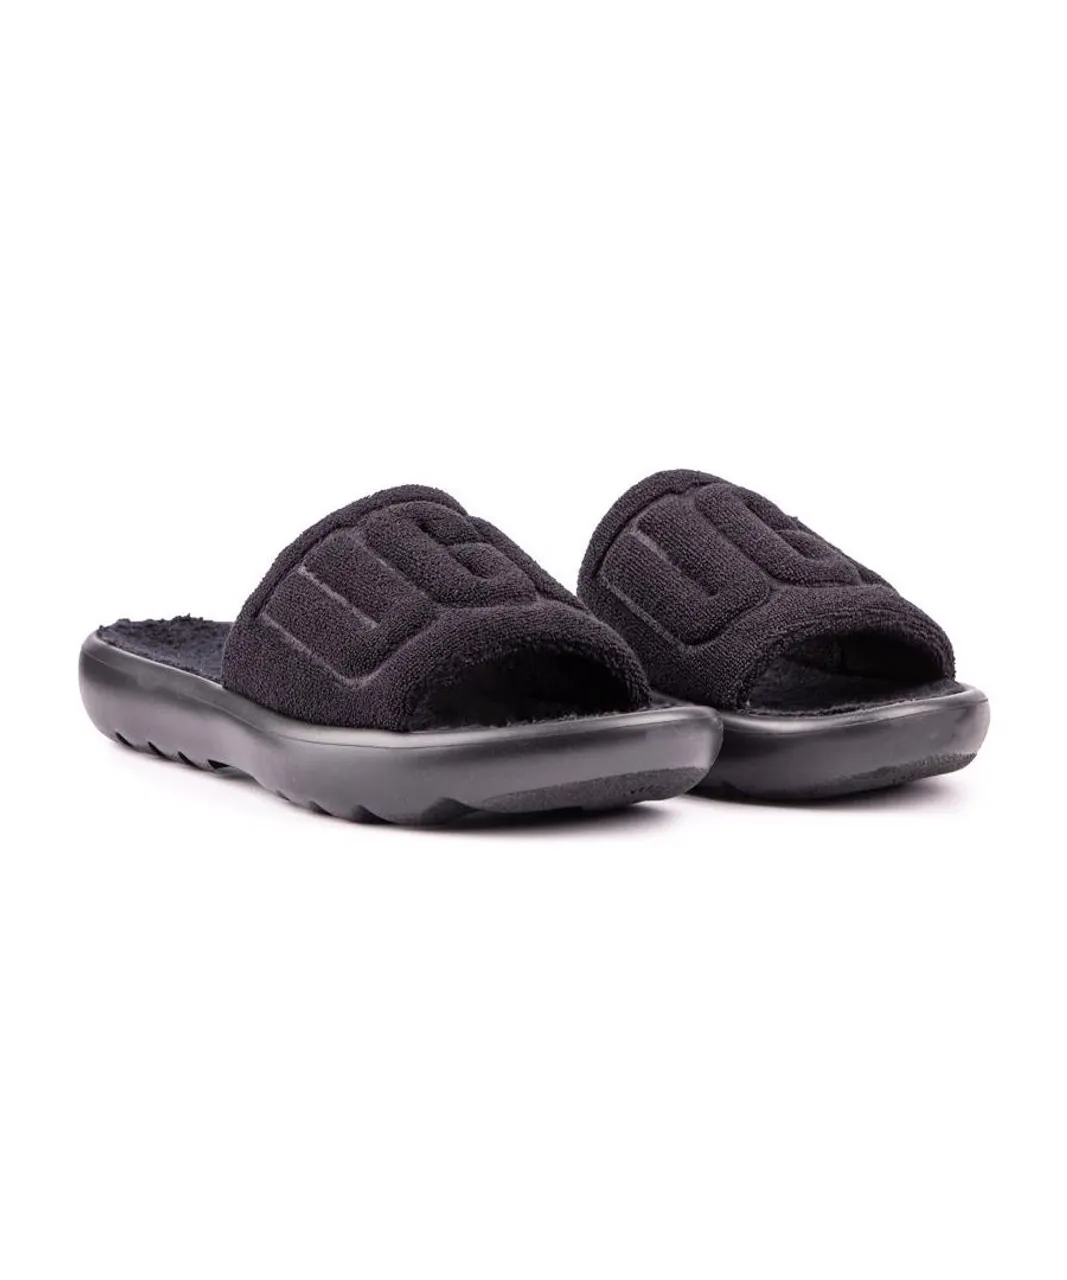 Ugg Australia Womens Ugg Mini Slide Sandals - Black Textile